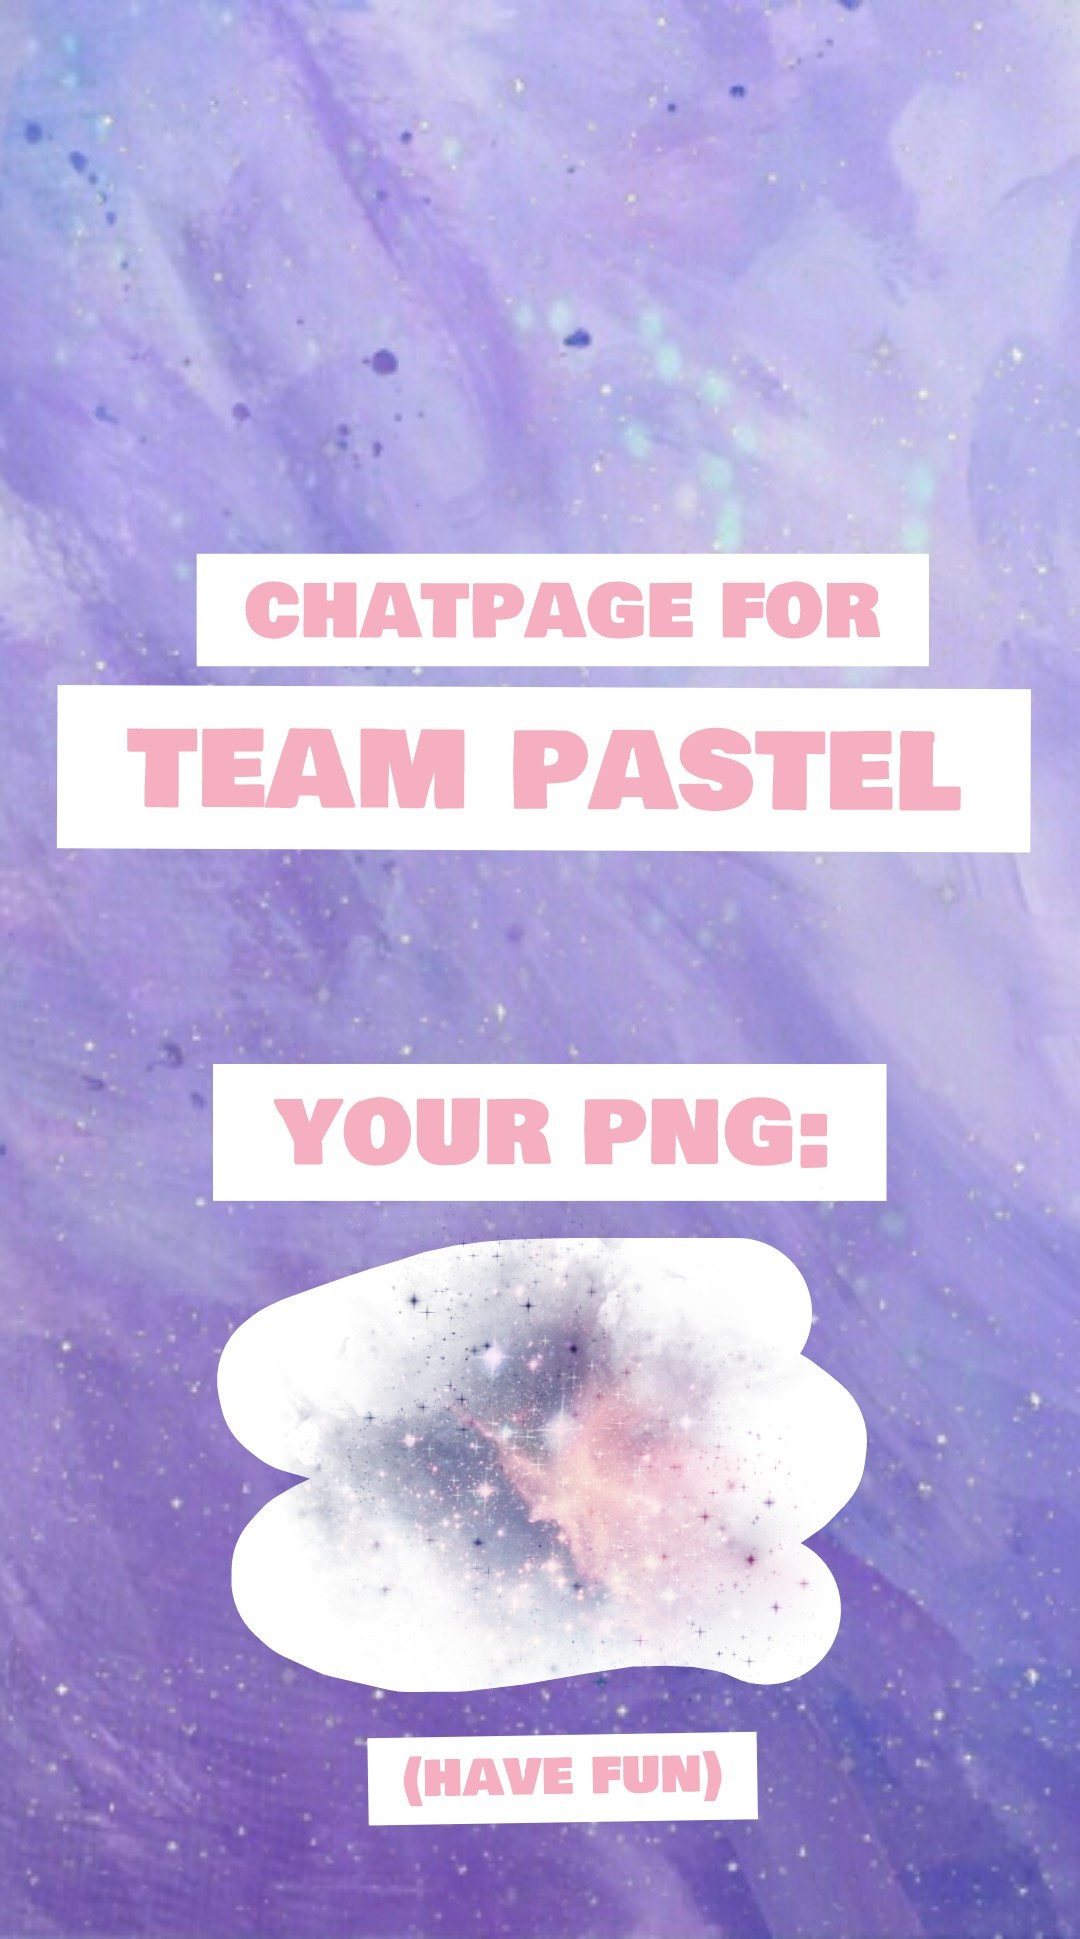 ~🌺~

team pastel chatpage!

have fun guys!

~🌺~